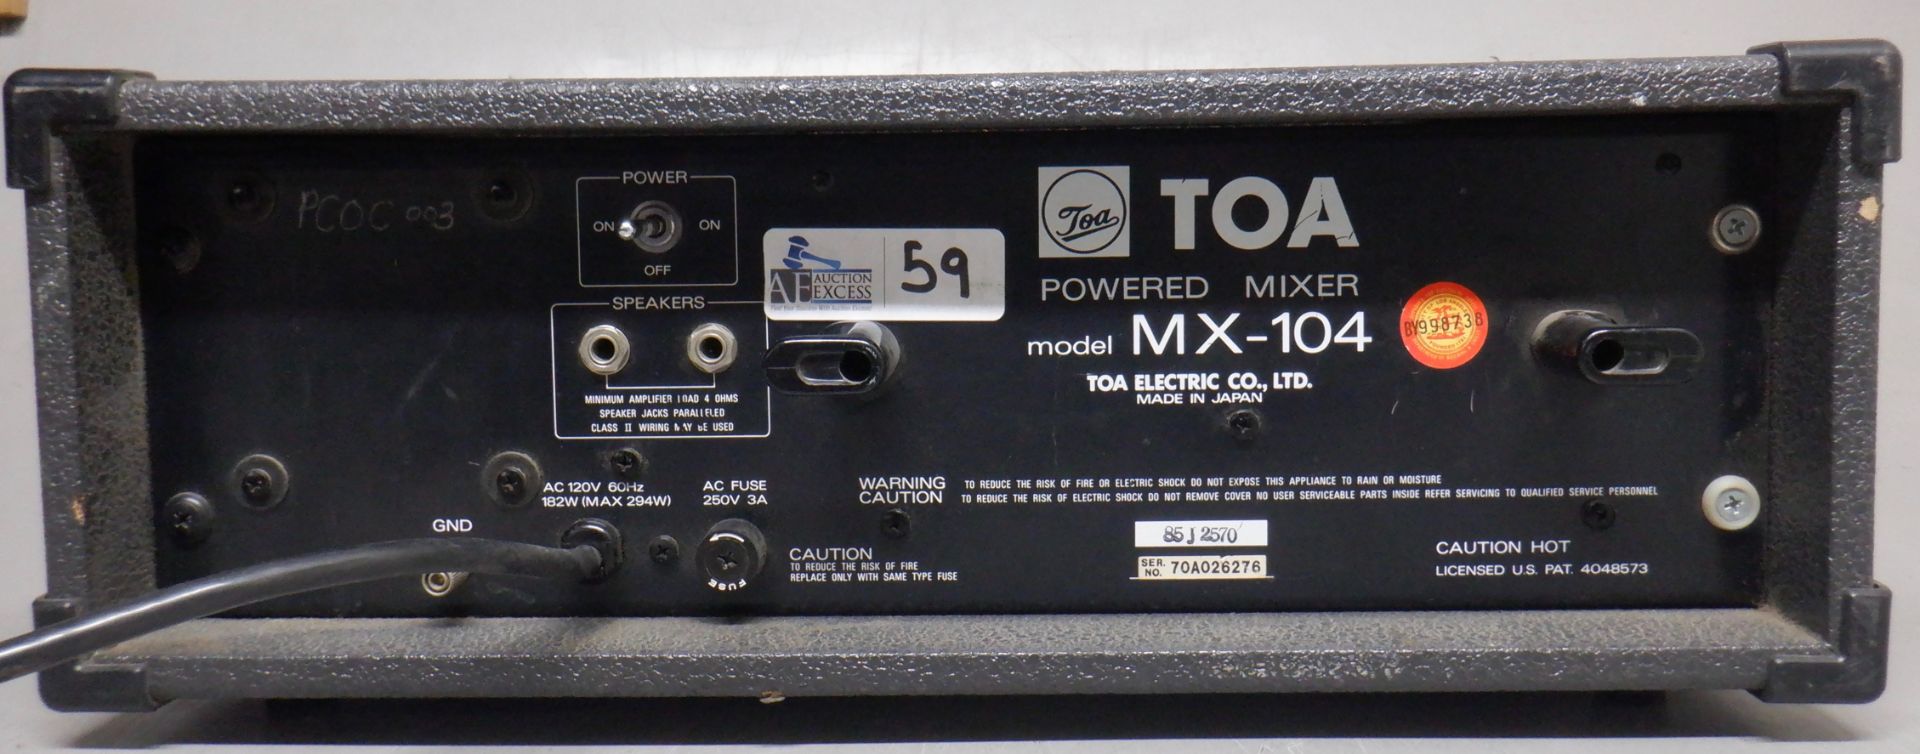 TOA MX-104 POWERED MIXER - Image 2 of 2